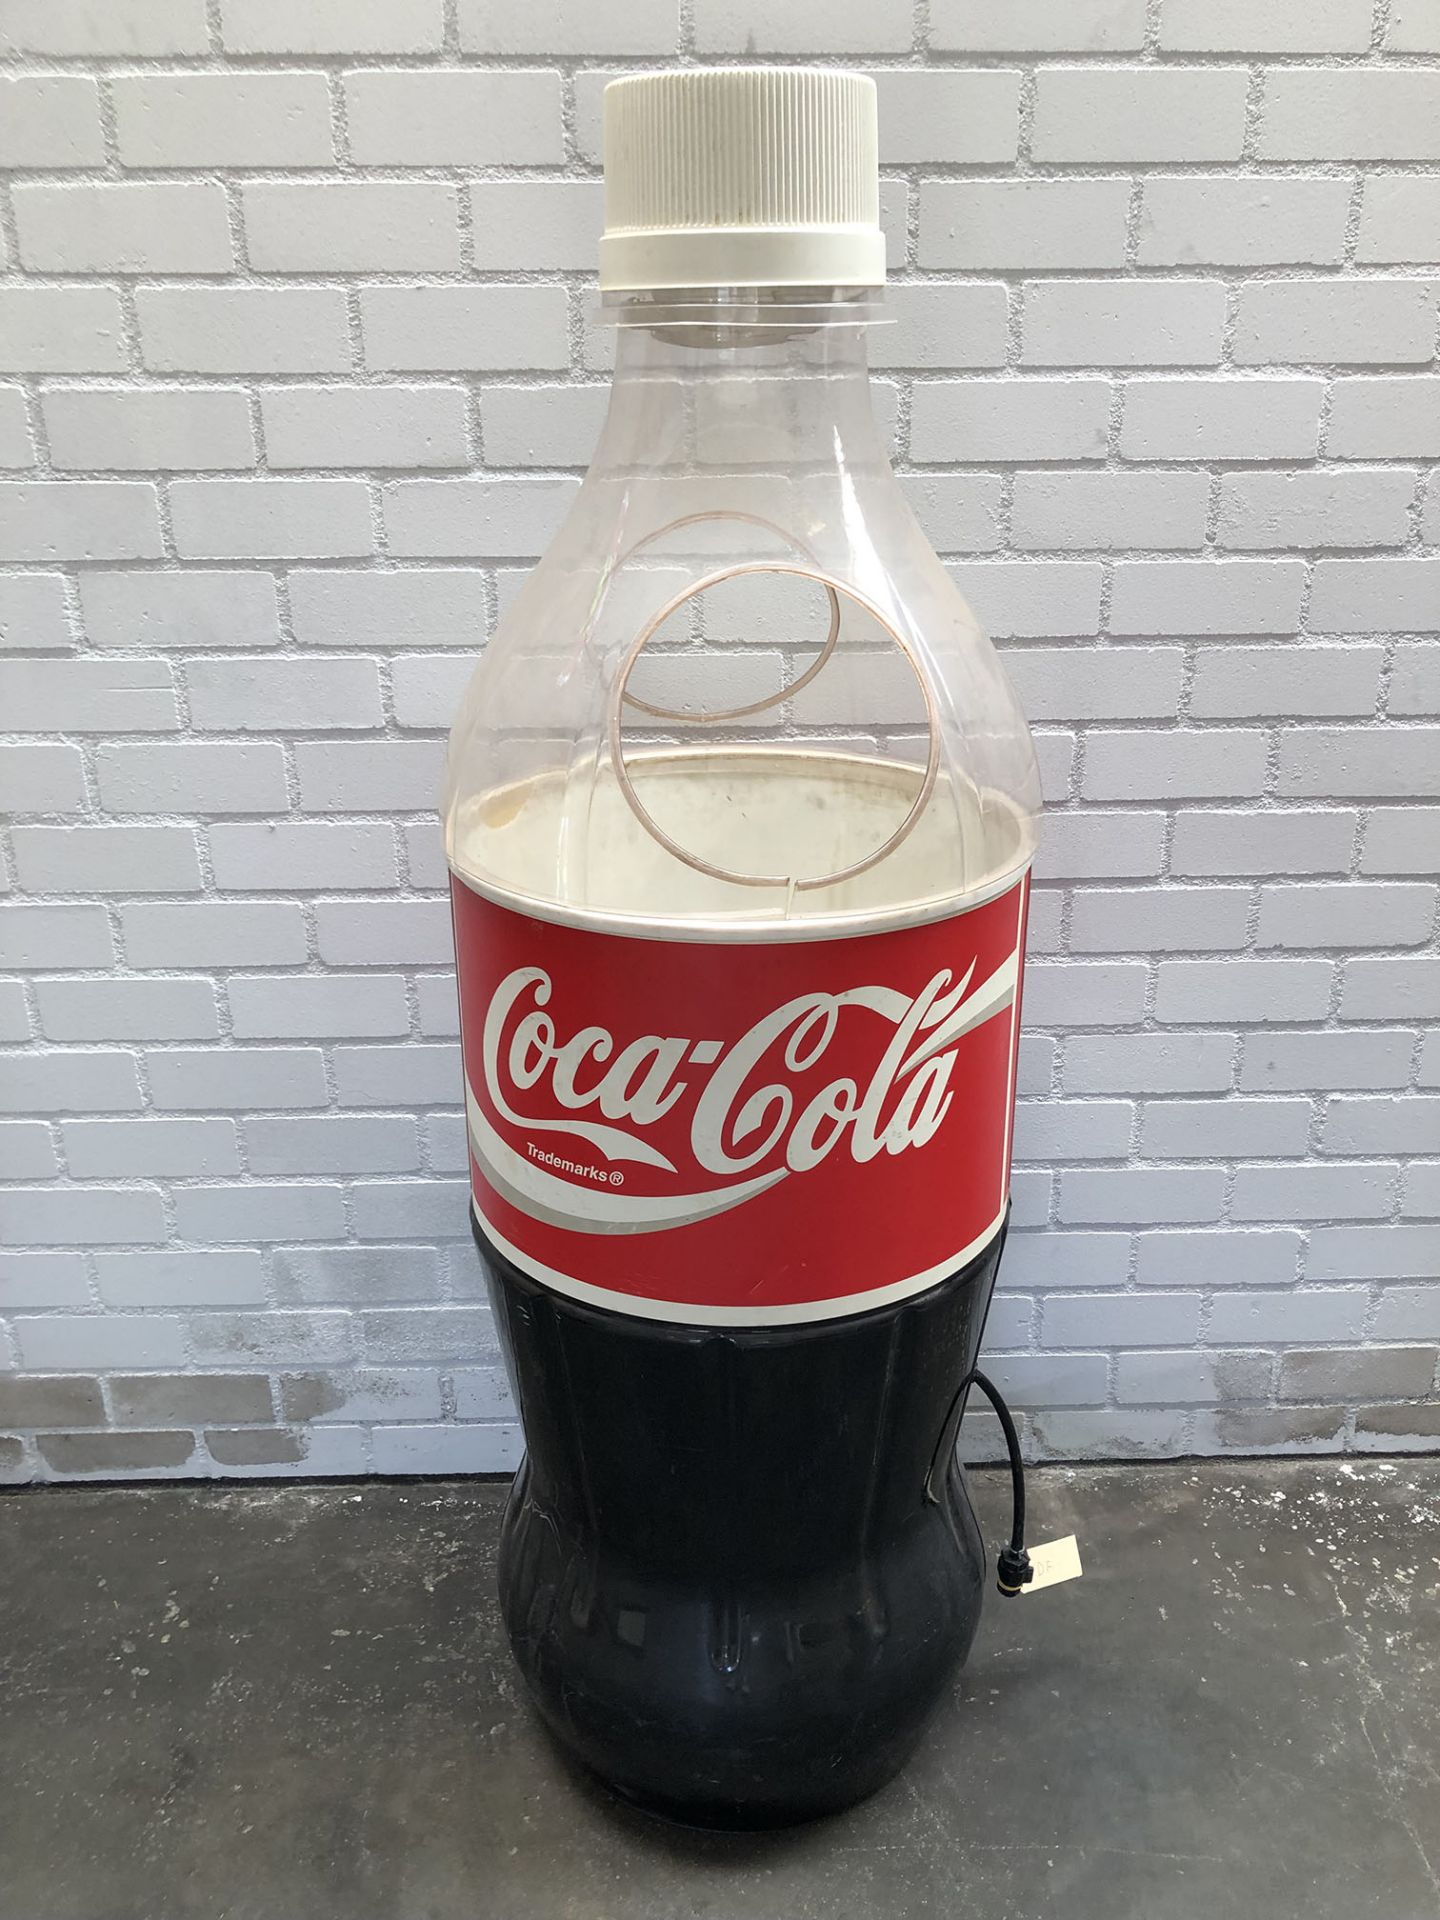 Huge Coca-Cola Bottle Shaped Ice Chest/Cooler - Image 5 of 5